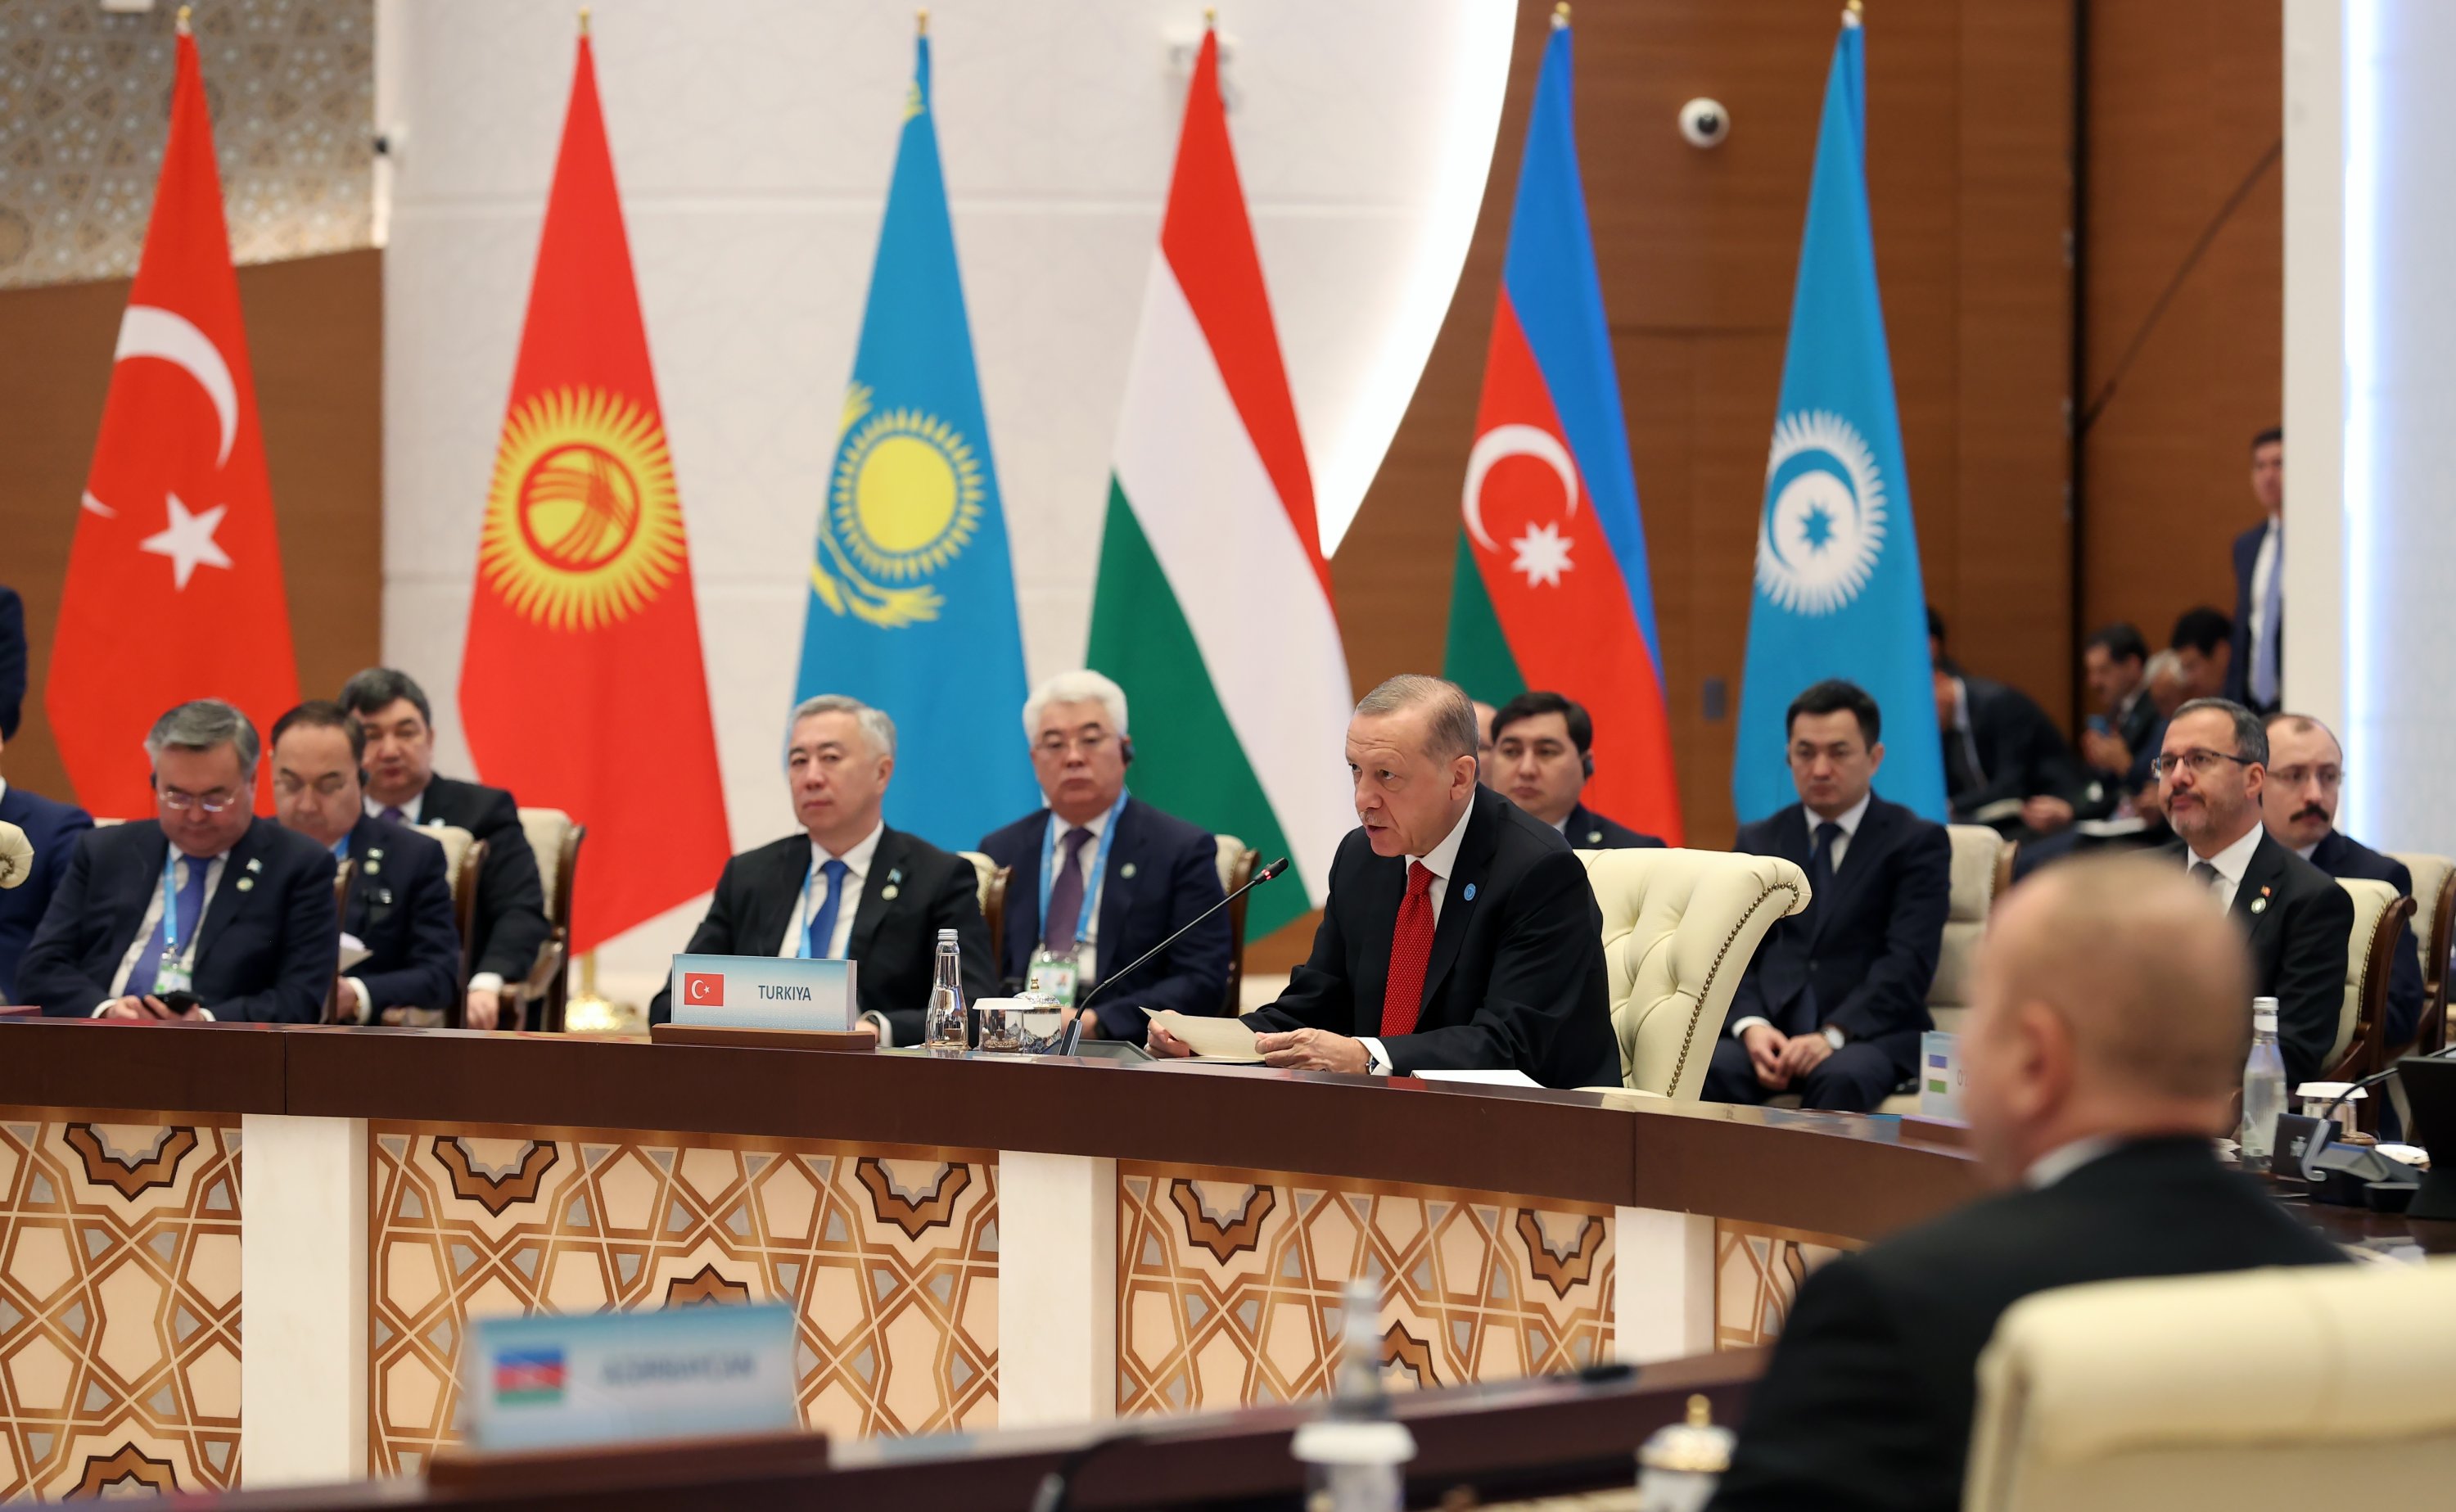 Turkic states should develop common security concept, Erdoğan says ...